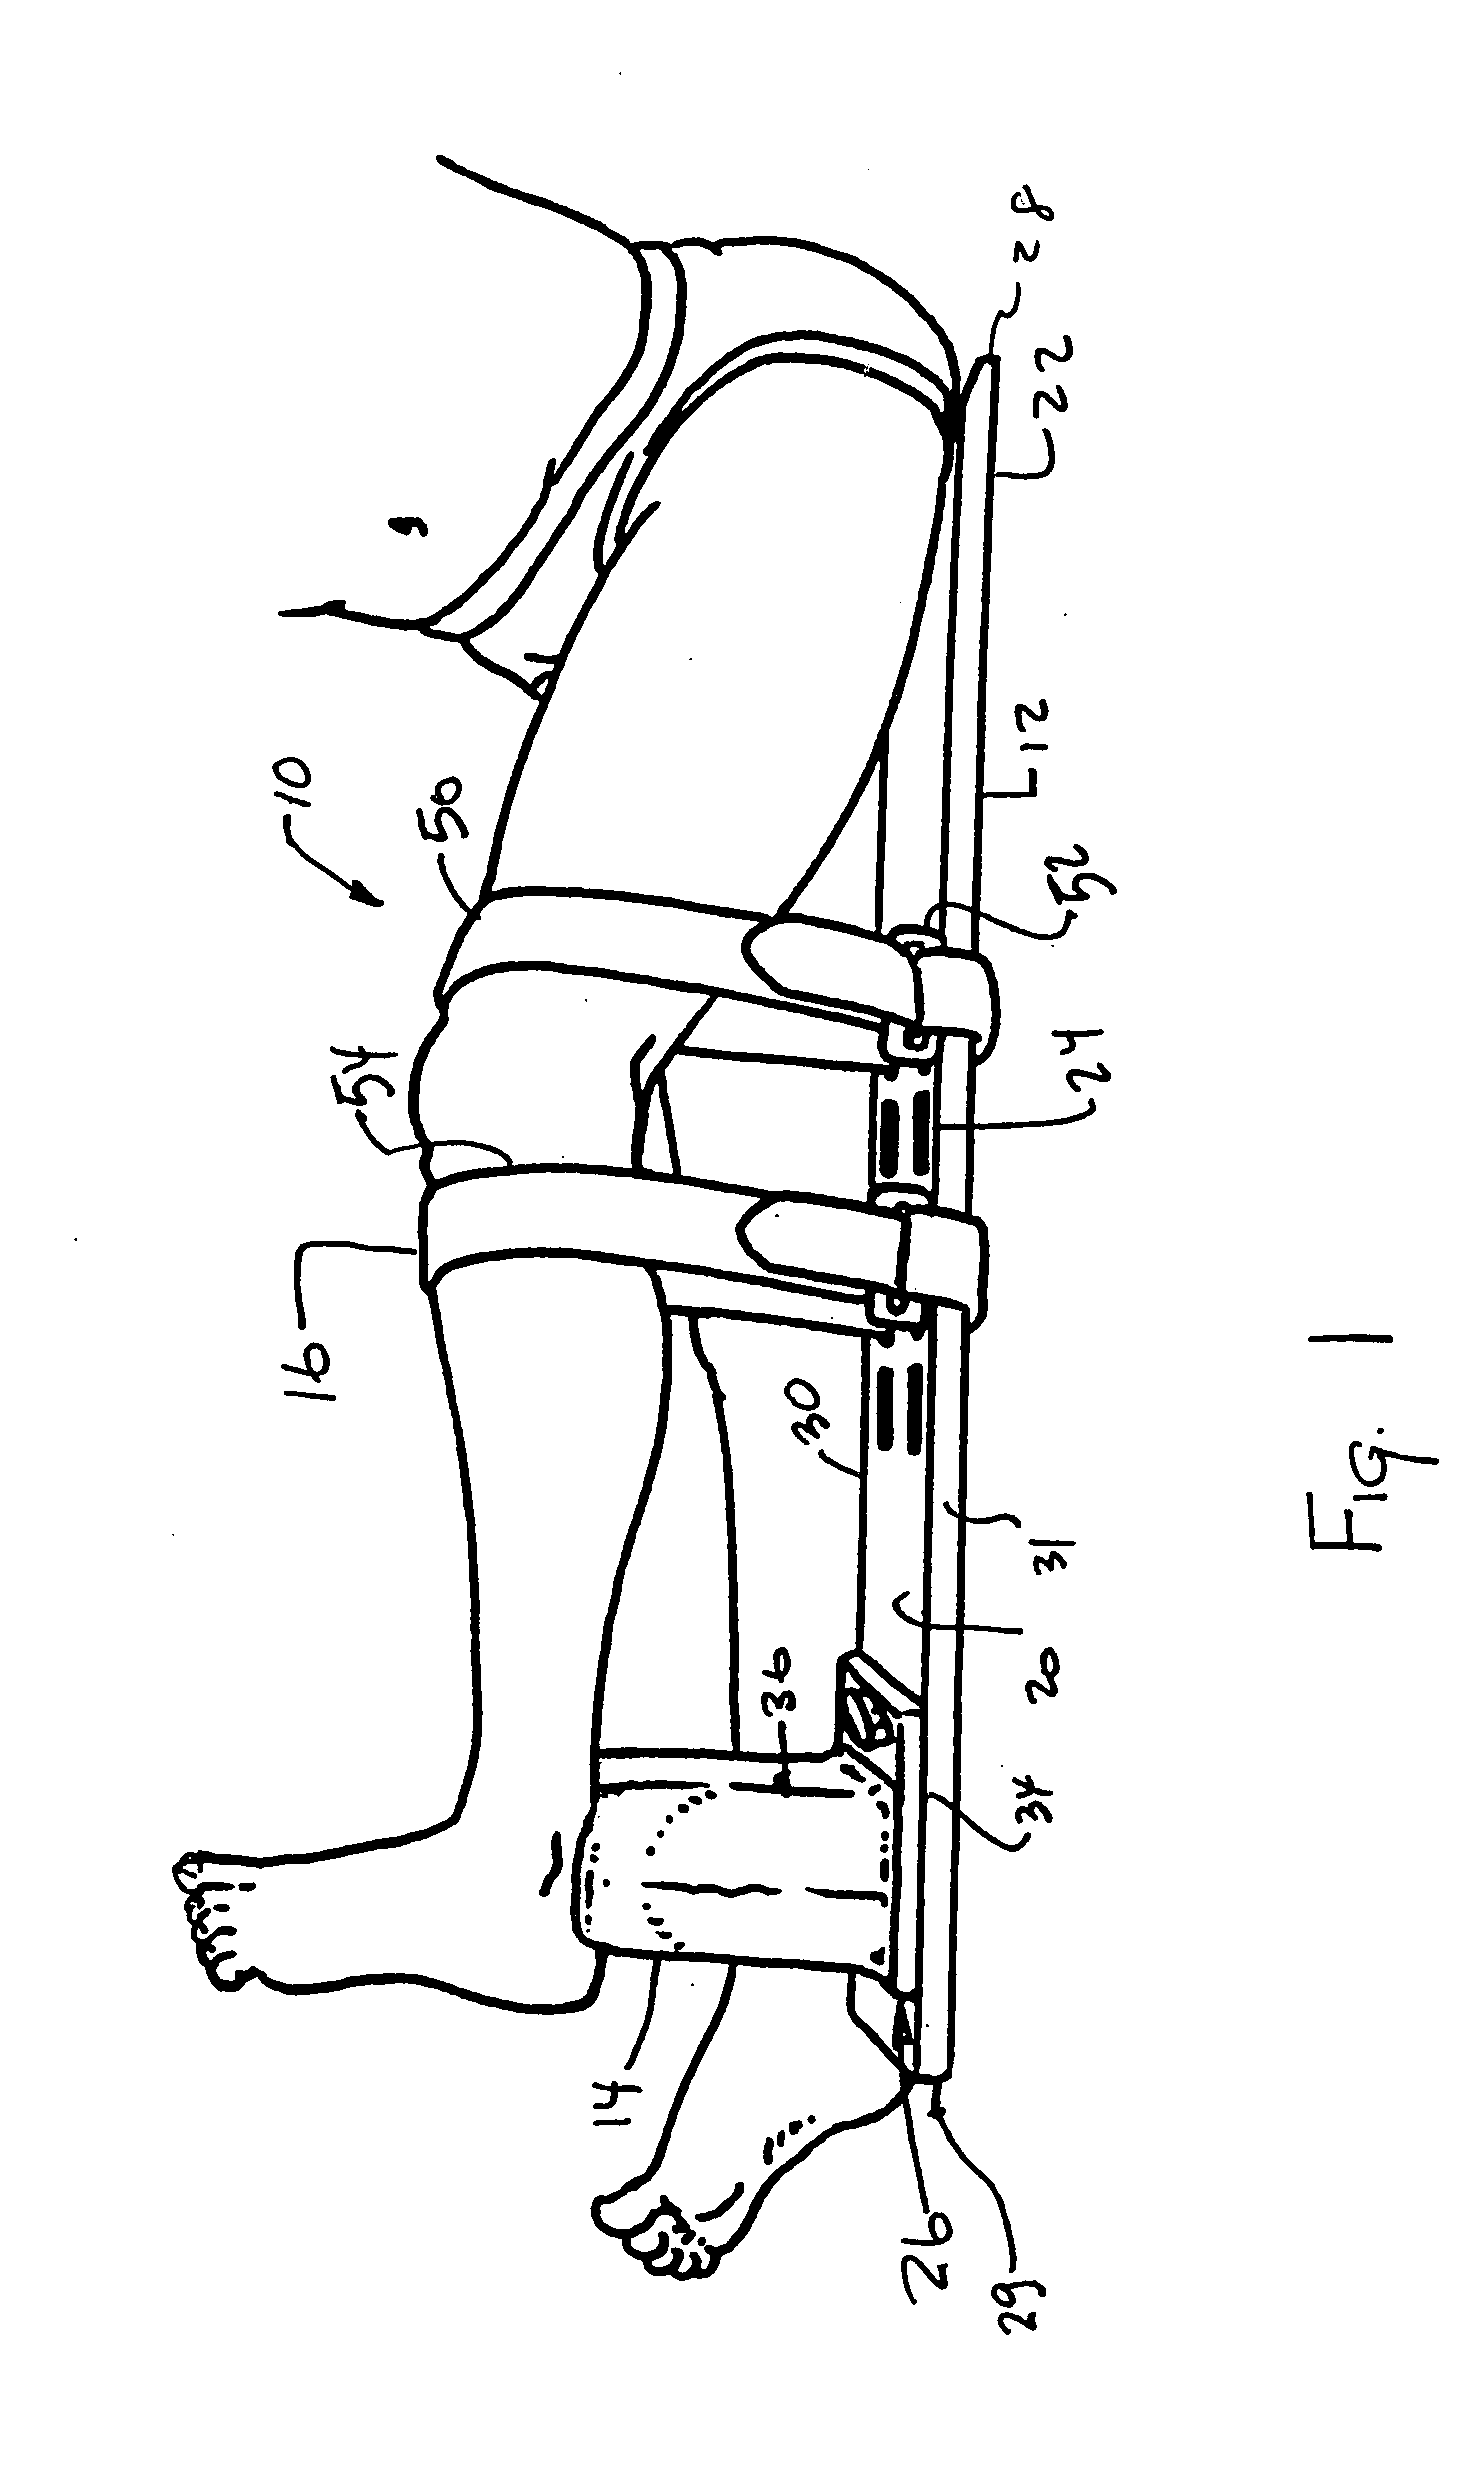 Knee extension apparatus